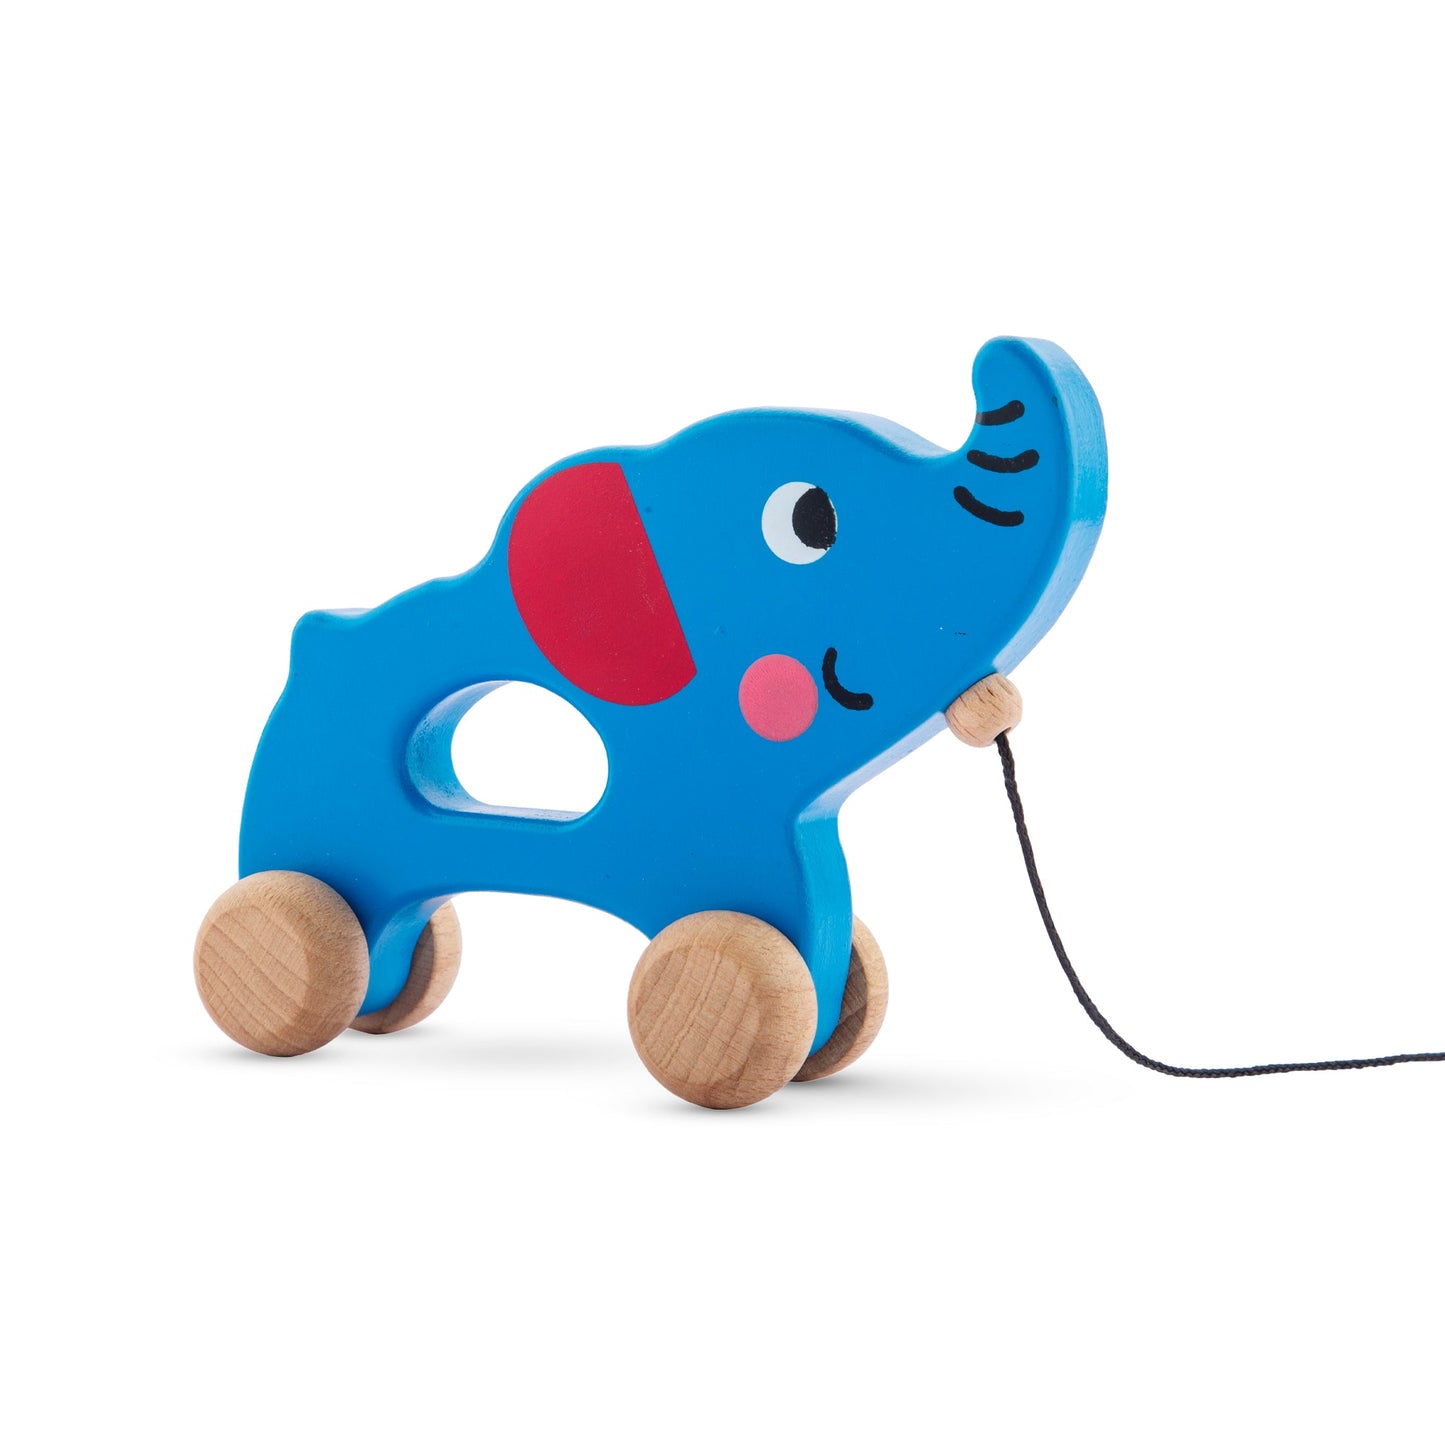 Buy Wooden Elephant Pull Along Toy for Kids - SkilloToys